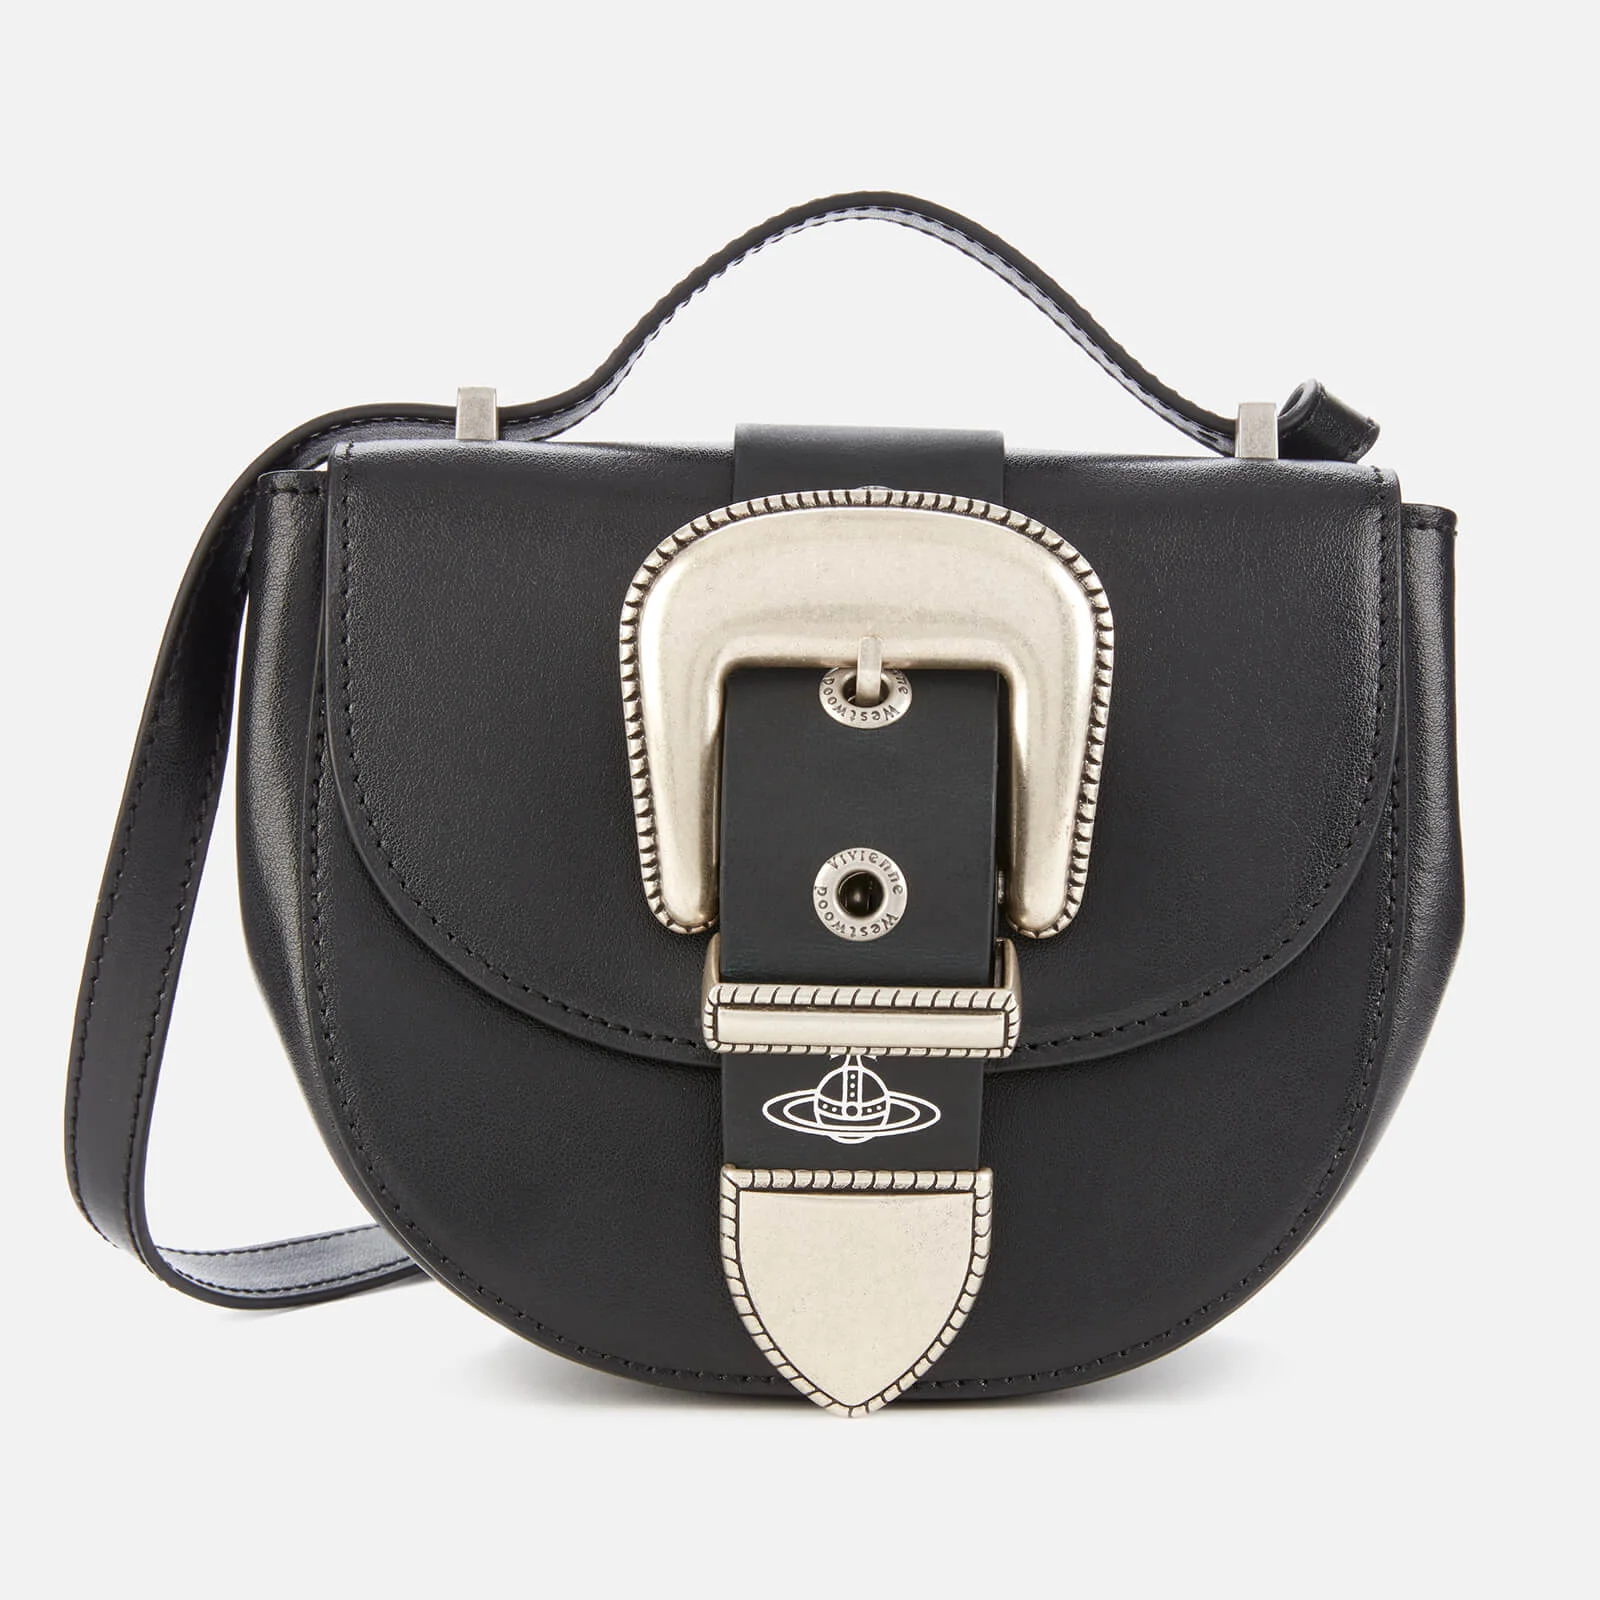 Vivienne Westwood Women's Rodeo Small Saddle Bag - Black Image 1